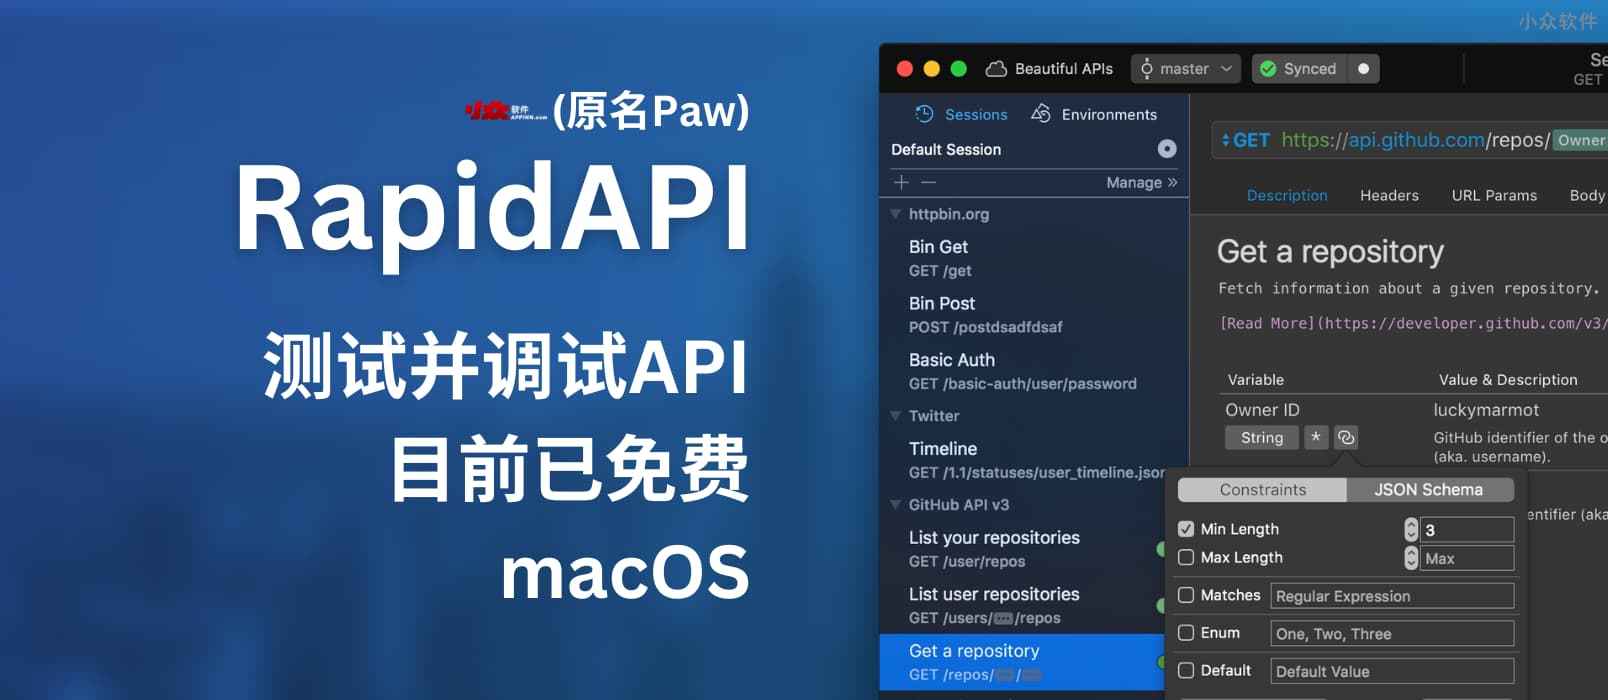 RapidAPI – 原名 Paw，用于测试并调试 API，目前已免费[macOS]